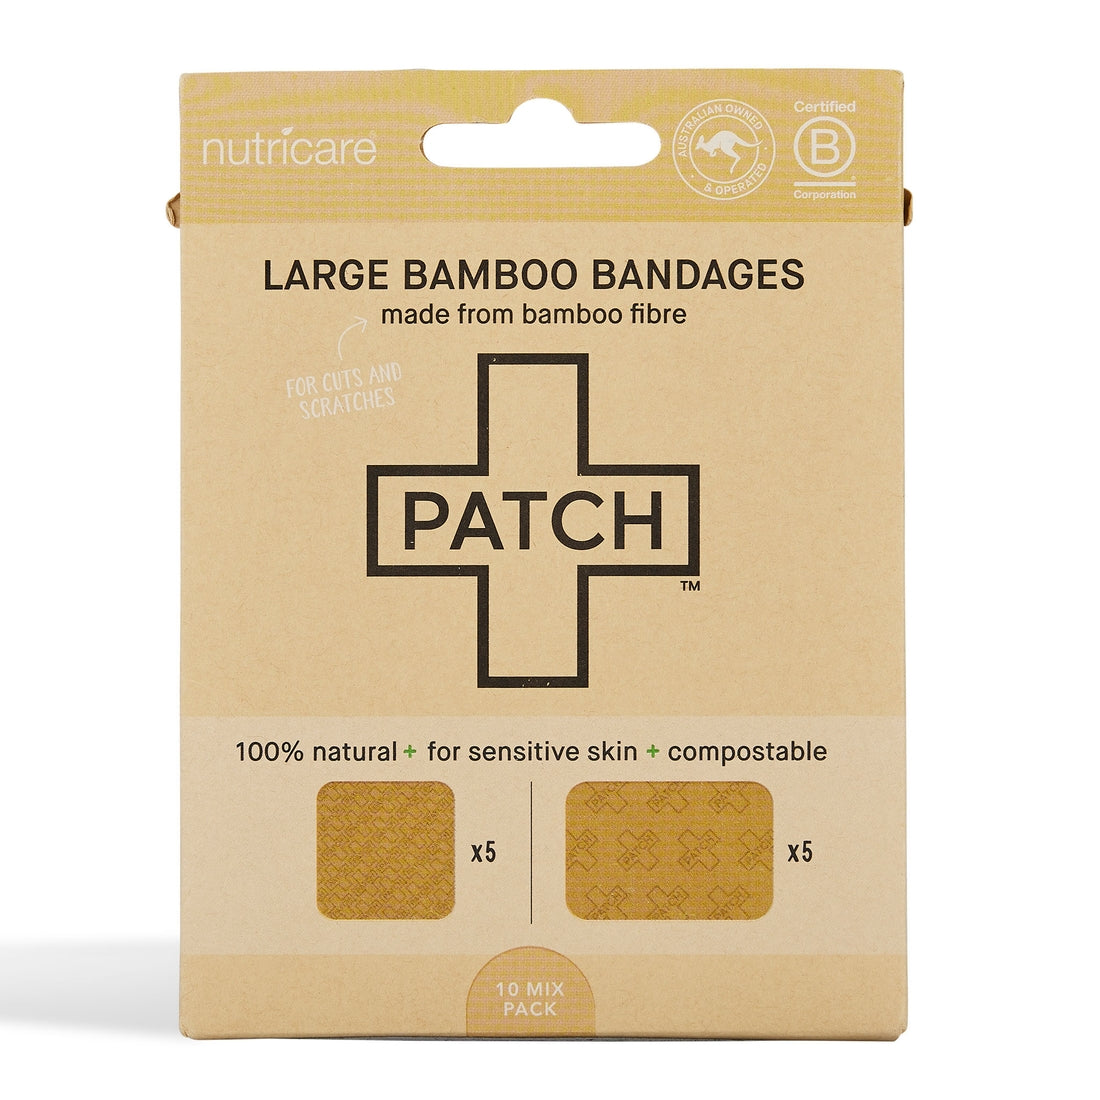 Patch Bamboo Bandages Natural Adhesive Large Bandages